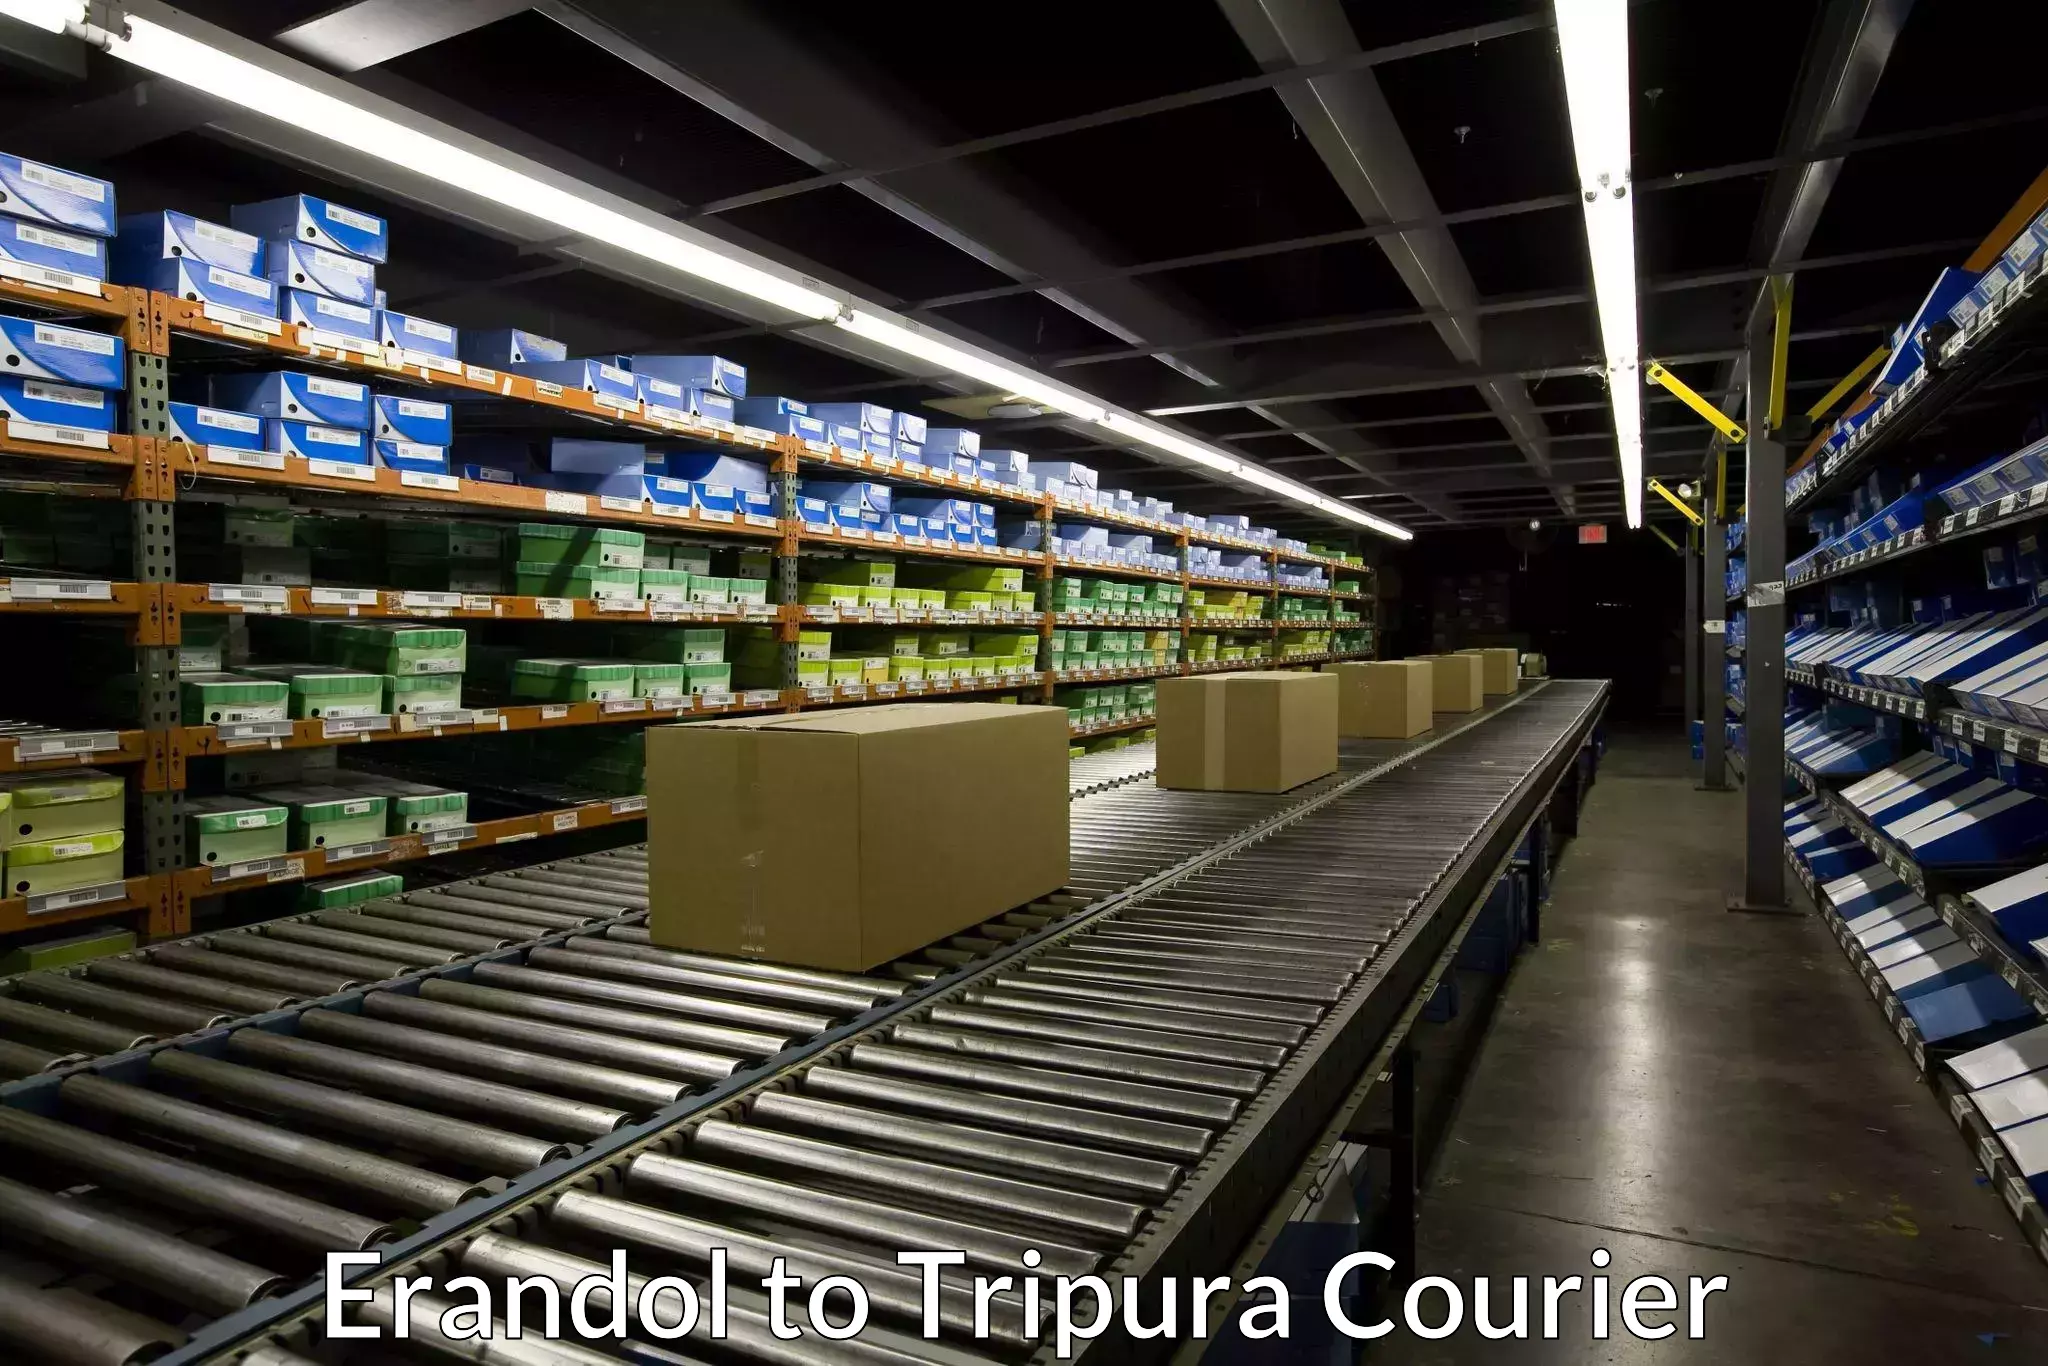 Courier service innovation in Erandol to Udaipur Tripura